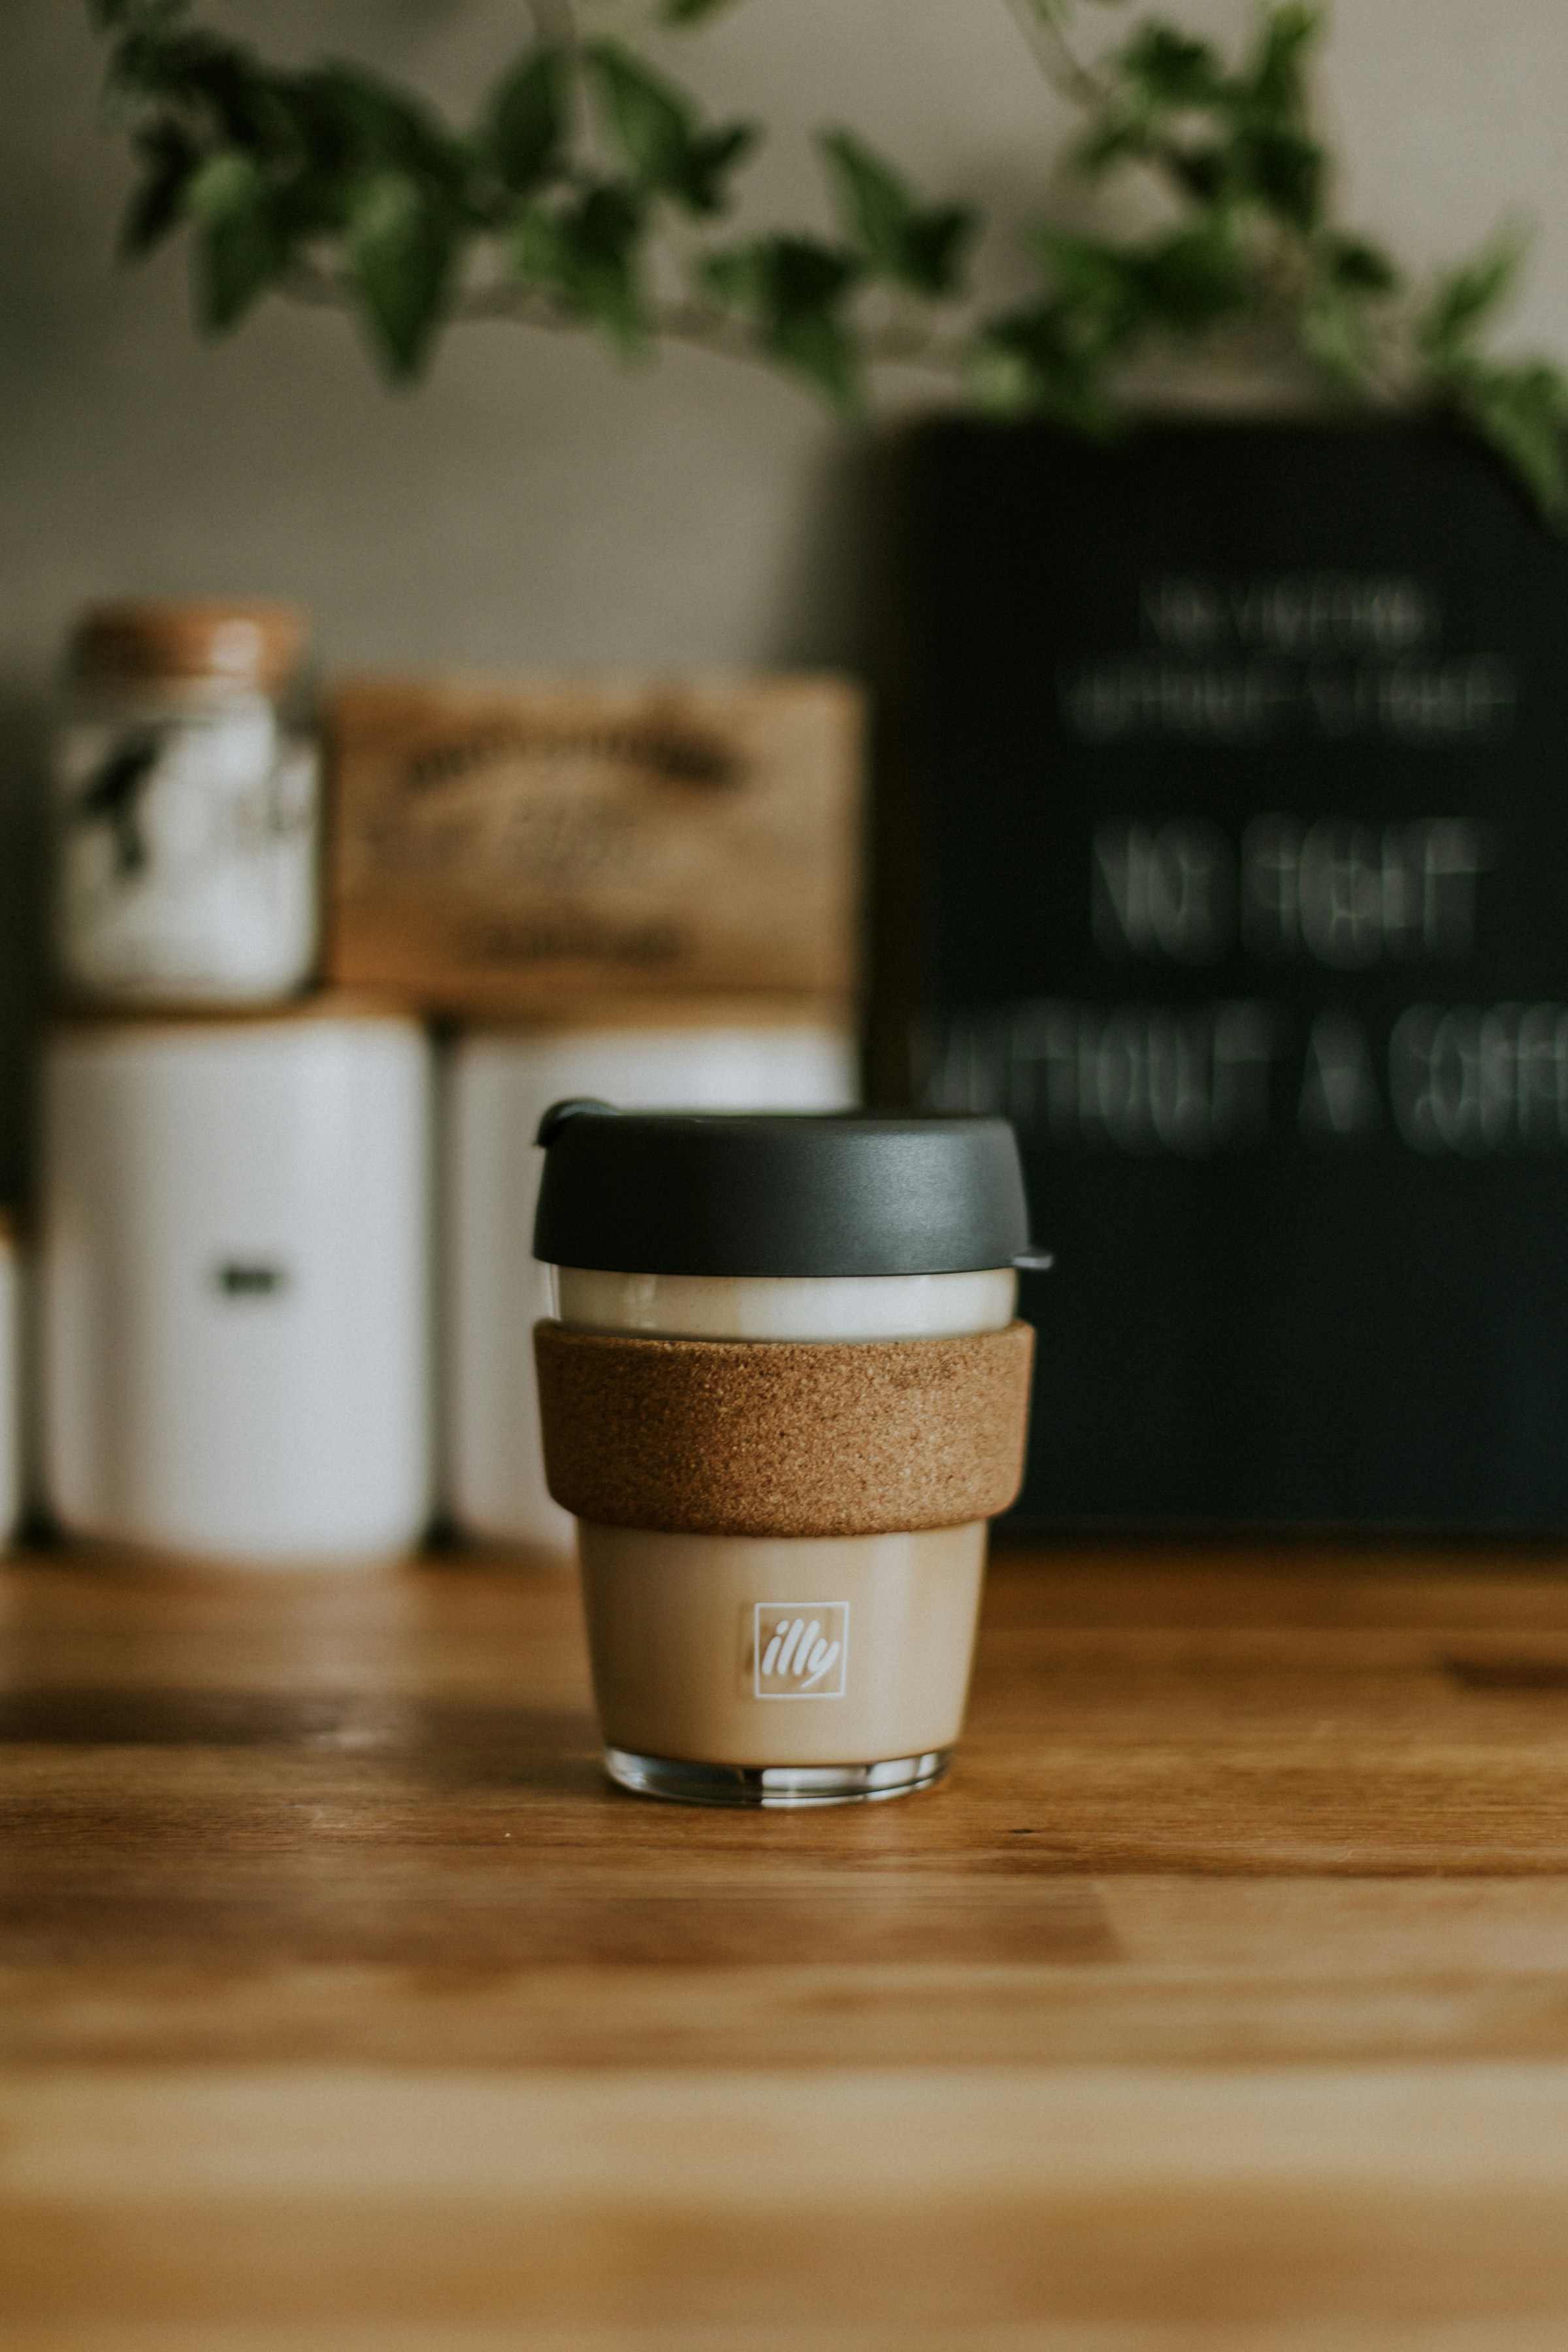 A takeaway coffee cup | Source: Unsplash